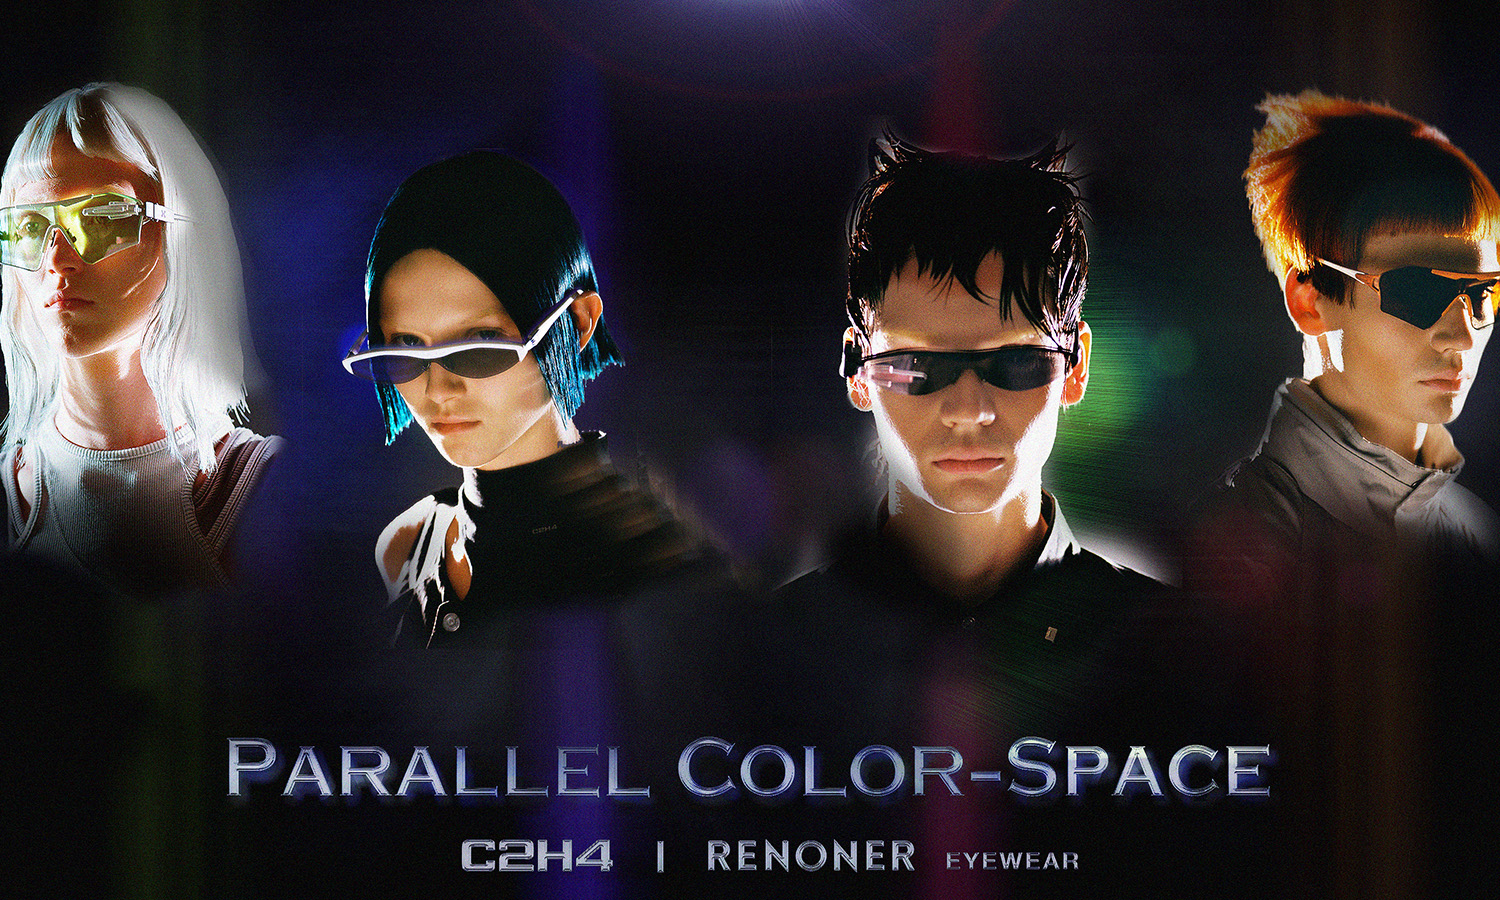 科技感十足，C2H4 x RENONER 打造「PARALLEL COLOR-SPACE」首辑联乘太阳镜系列